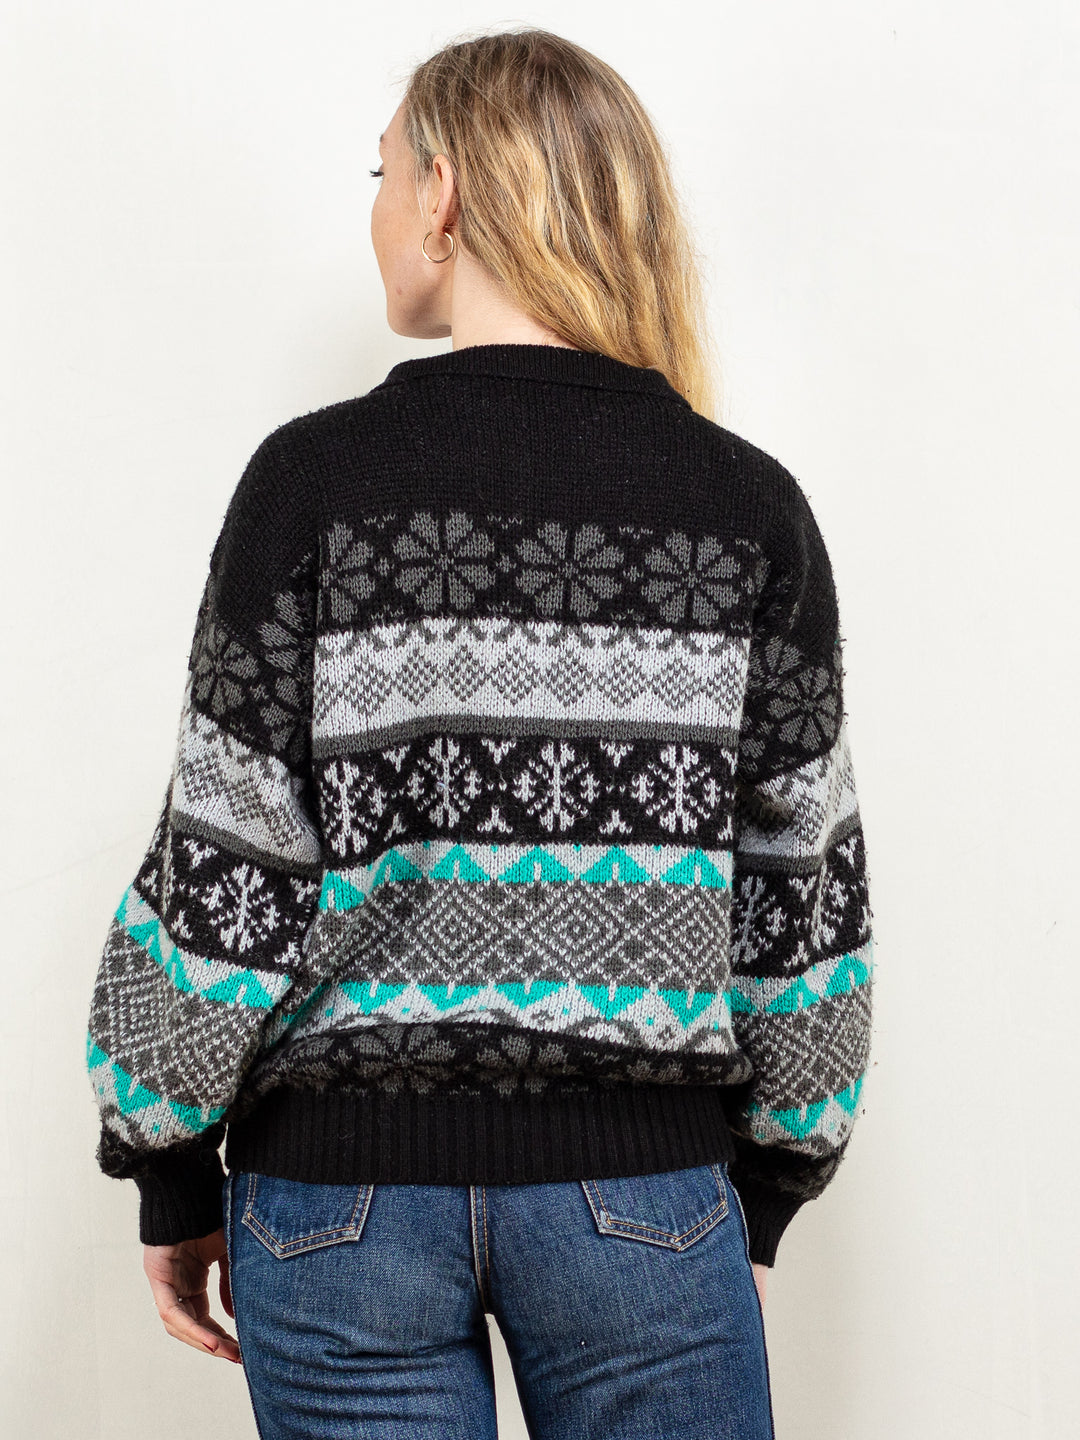 Norwegian Wool Sweater vintage 90's trussardi wool blend pullover ski sweater women jumper apres ski cottagecore sustainable size medium